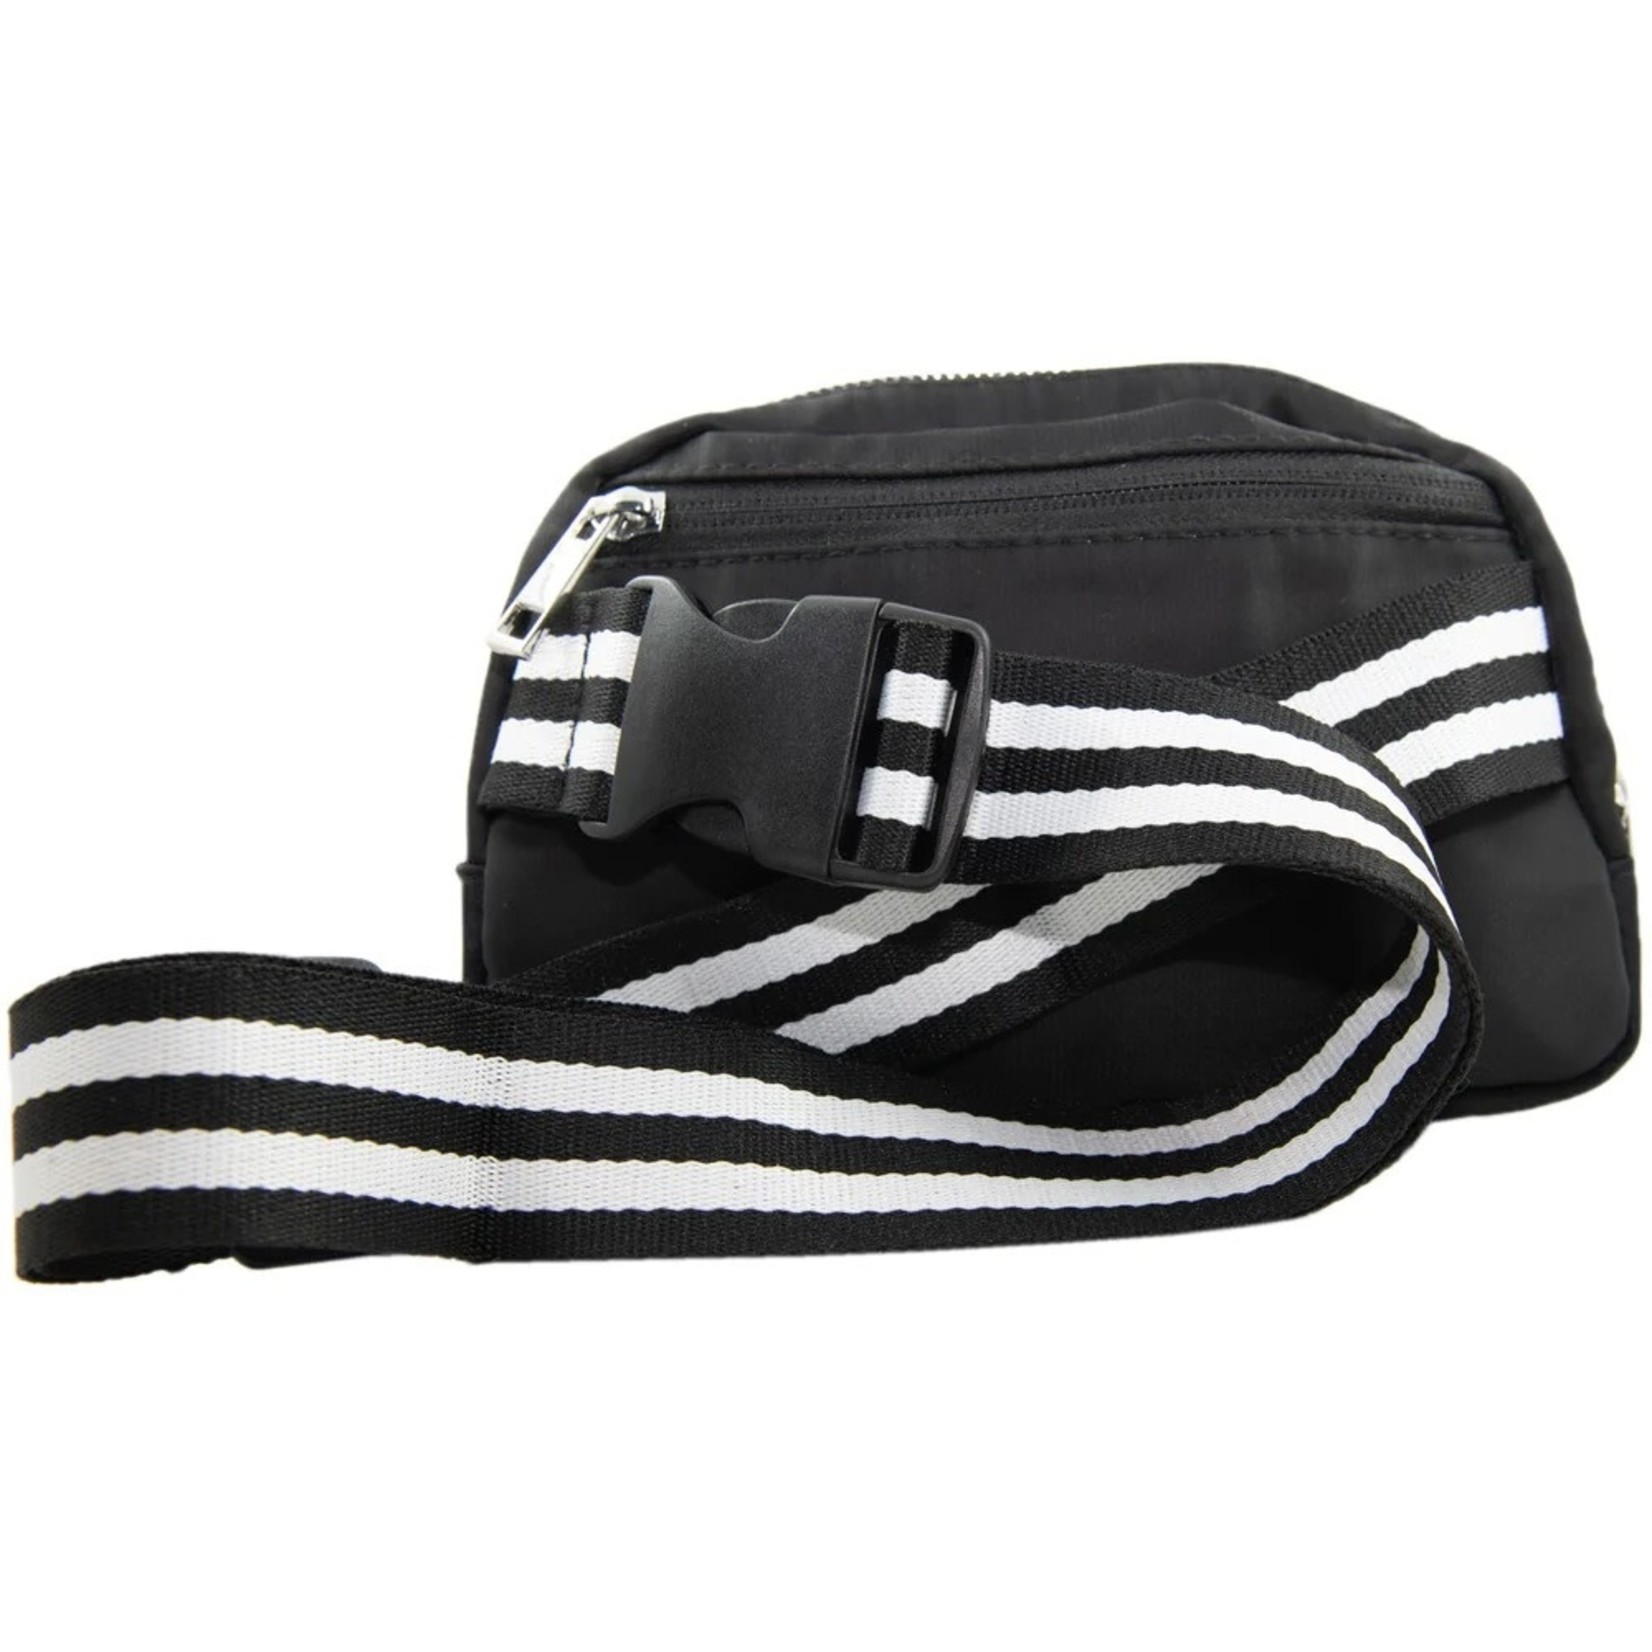 Katydid Striped Strap Belt Bag